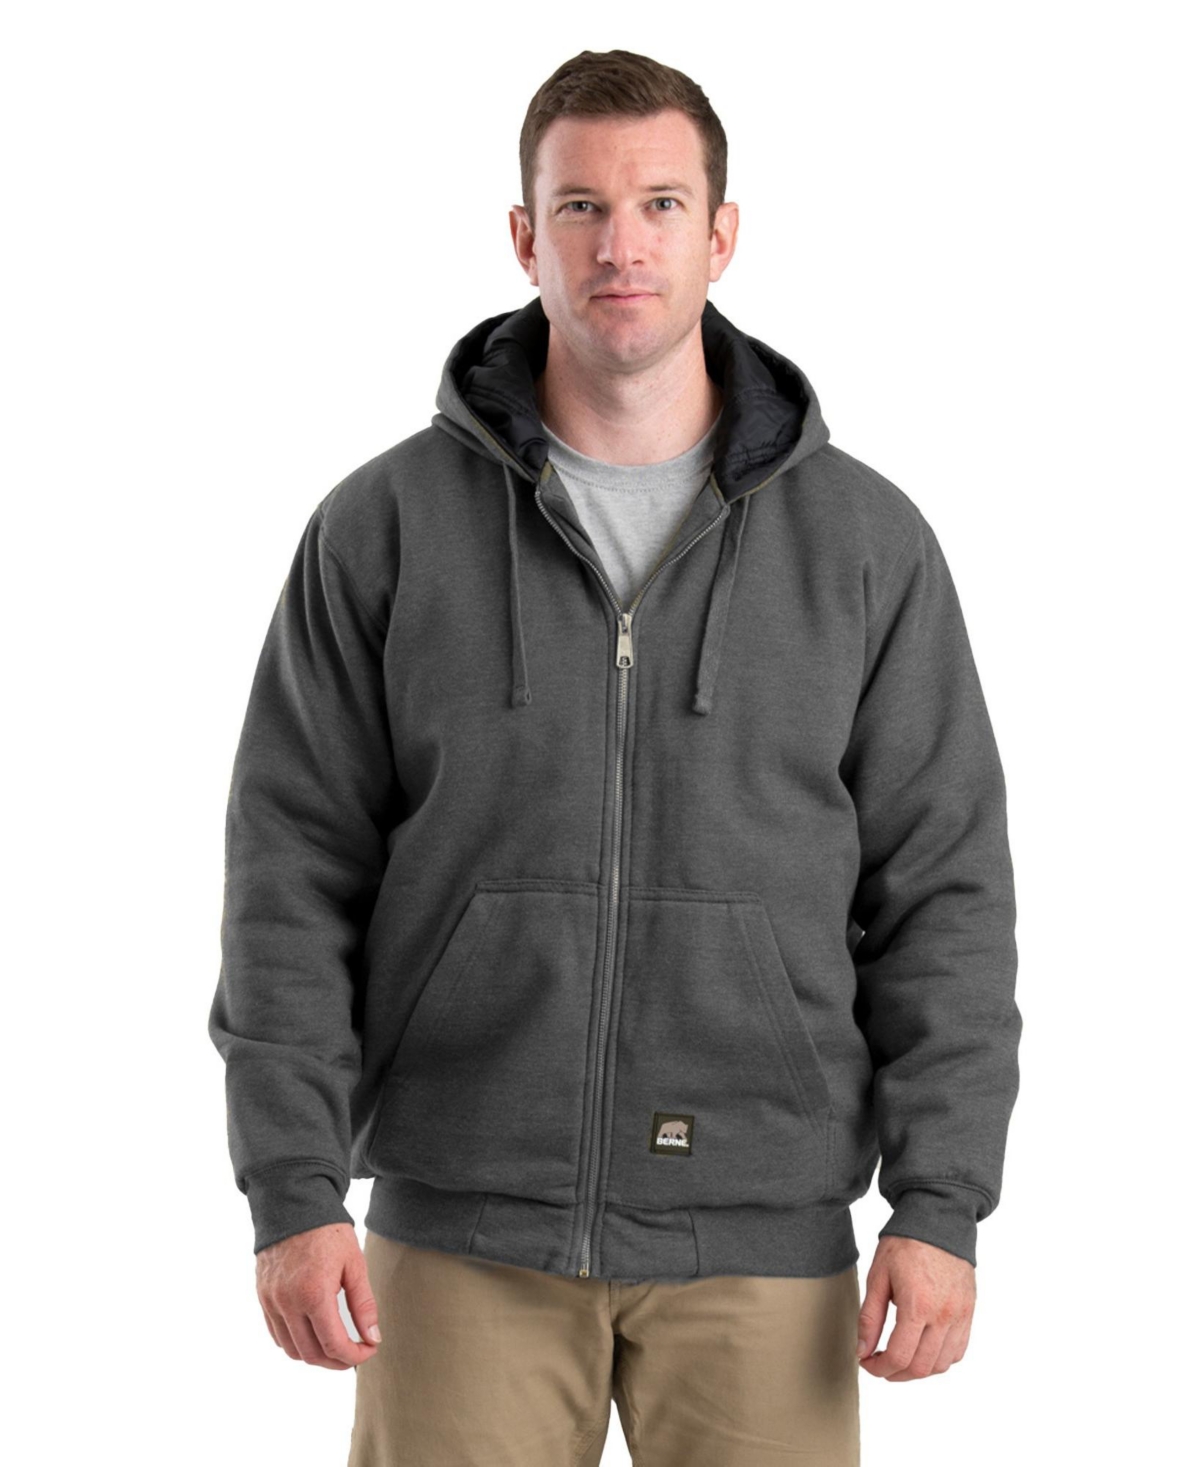 Men's Highland Insulated Full-Zip Hooded Sweatshirt Big & Tall - Navy